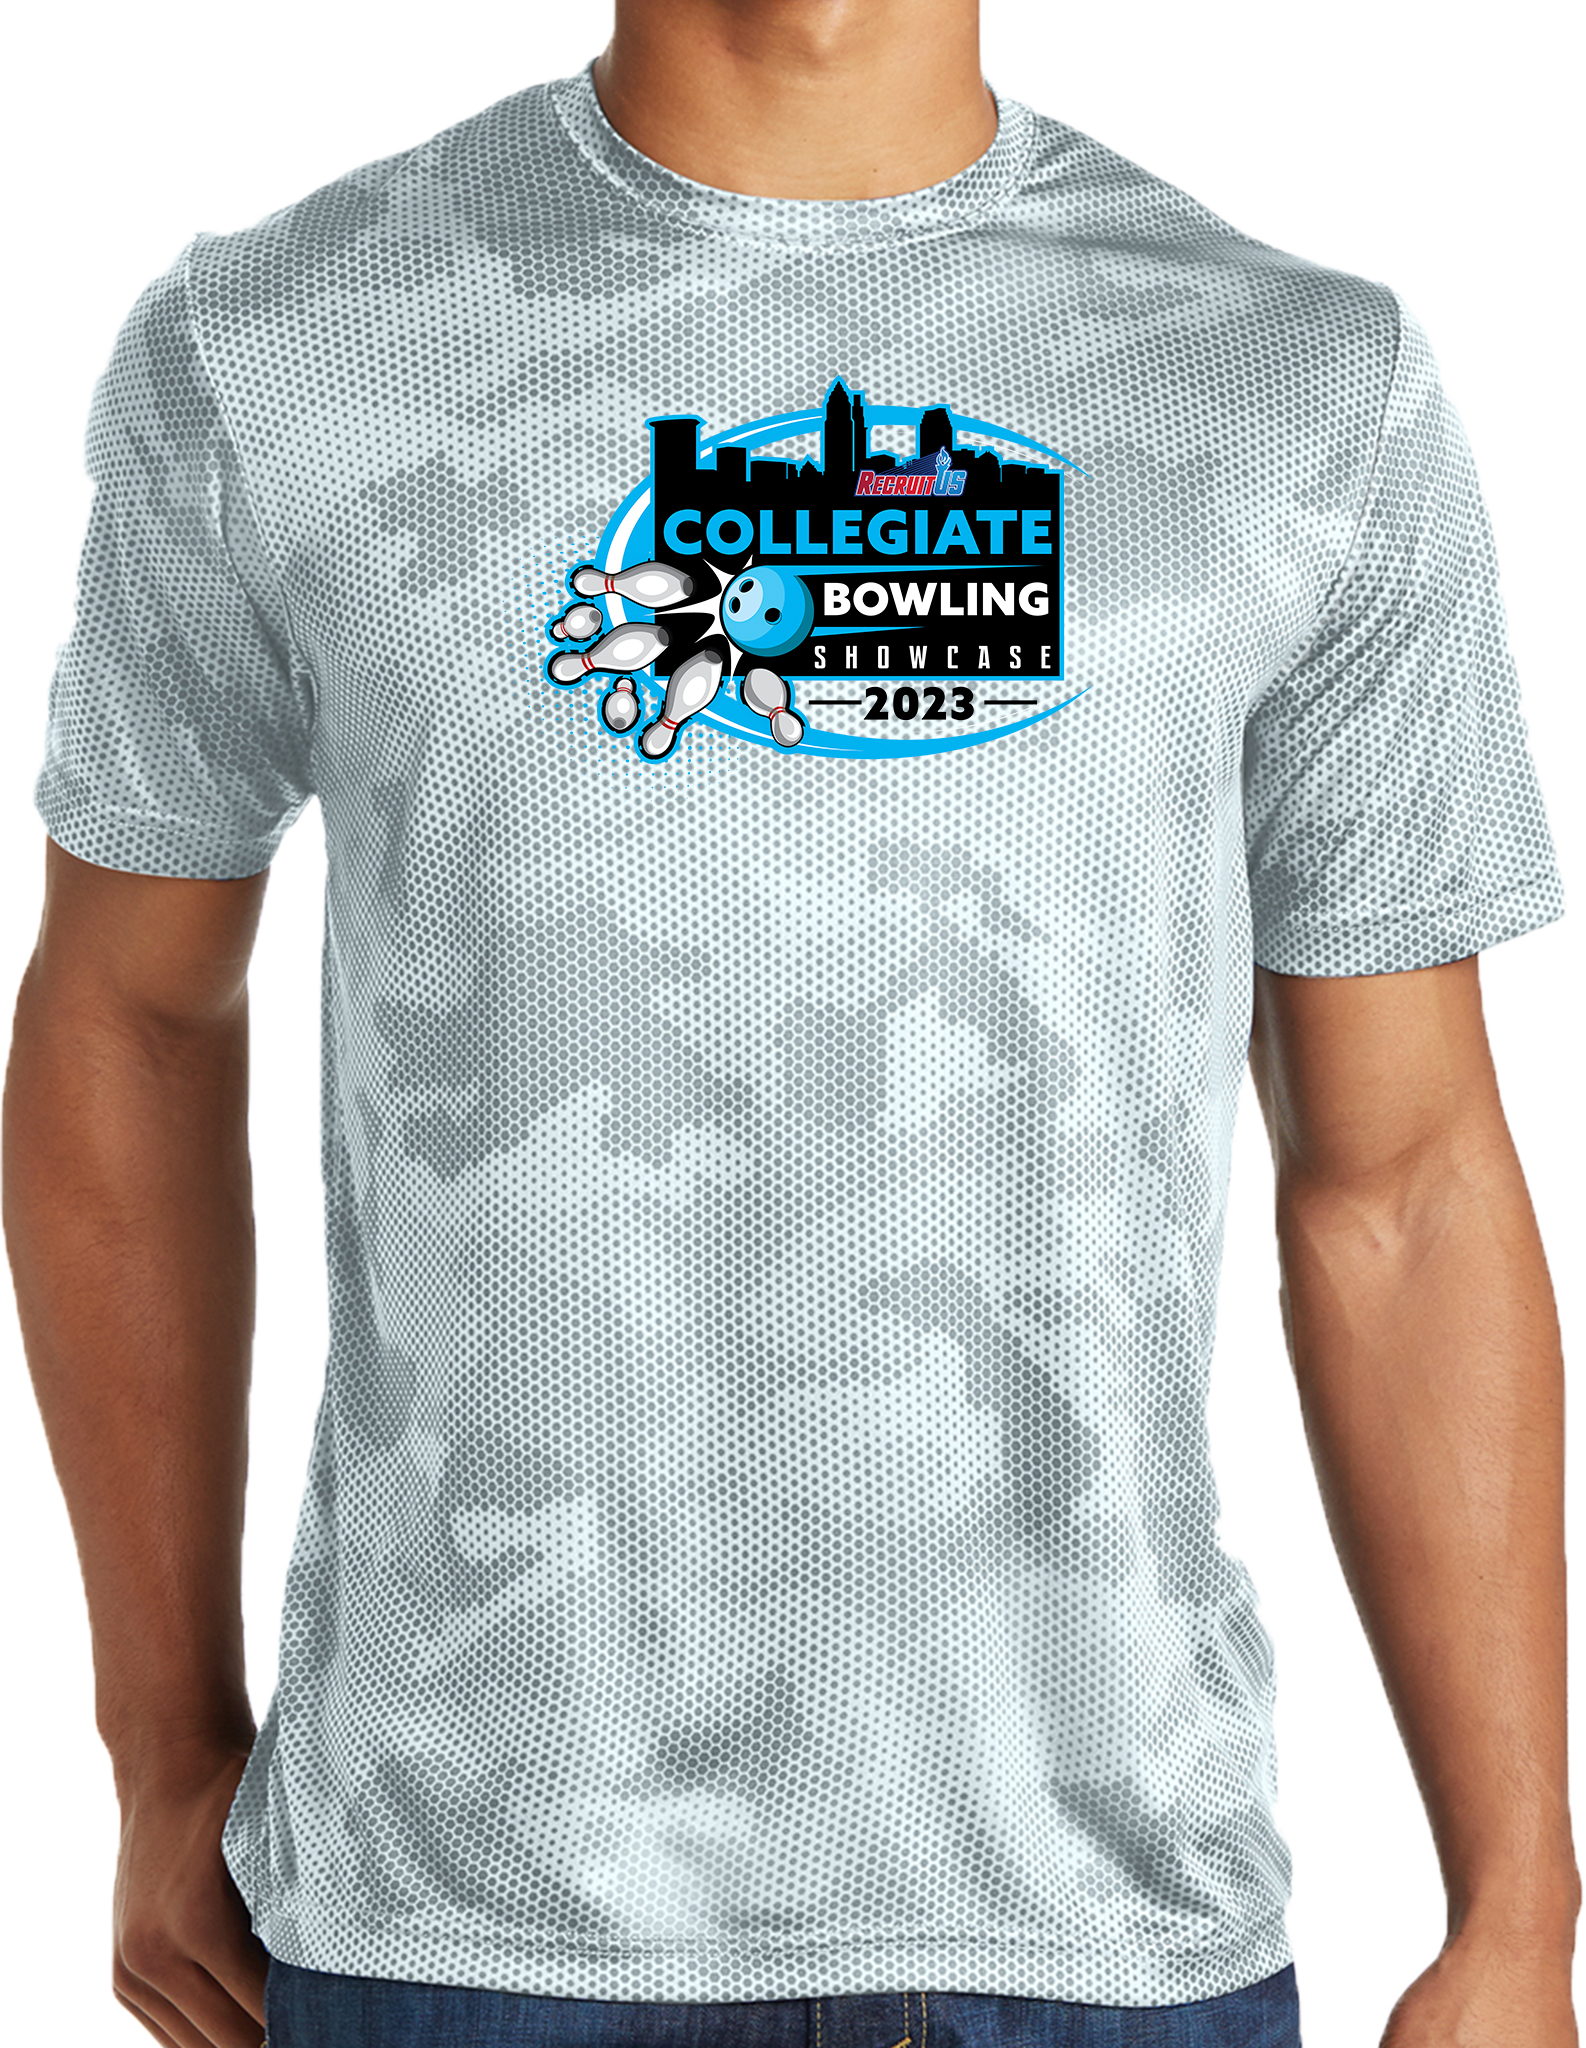 PERFORMANCE SHIRTS - 2023 Collegiate Bowling Showcase